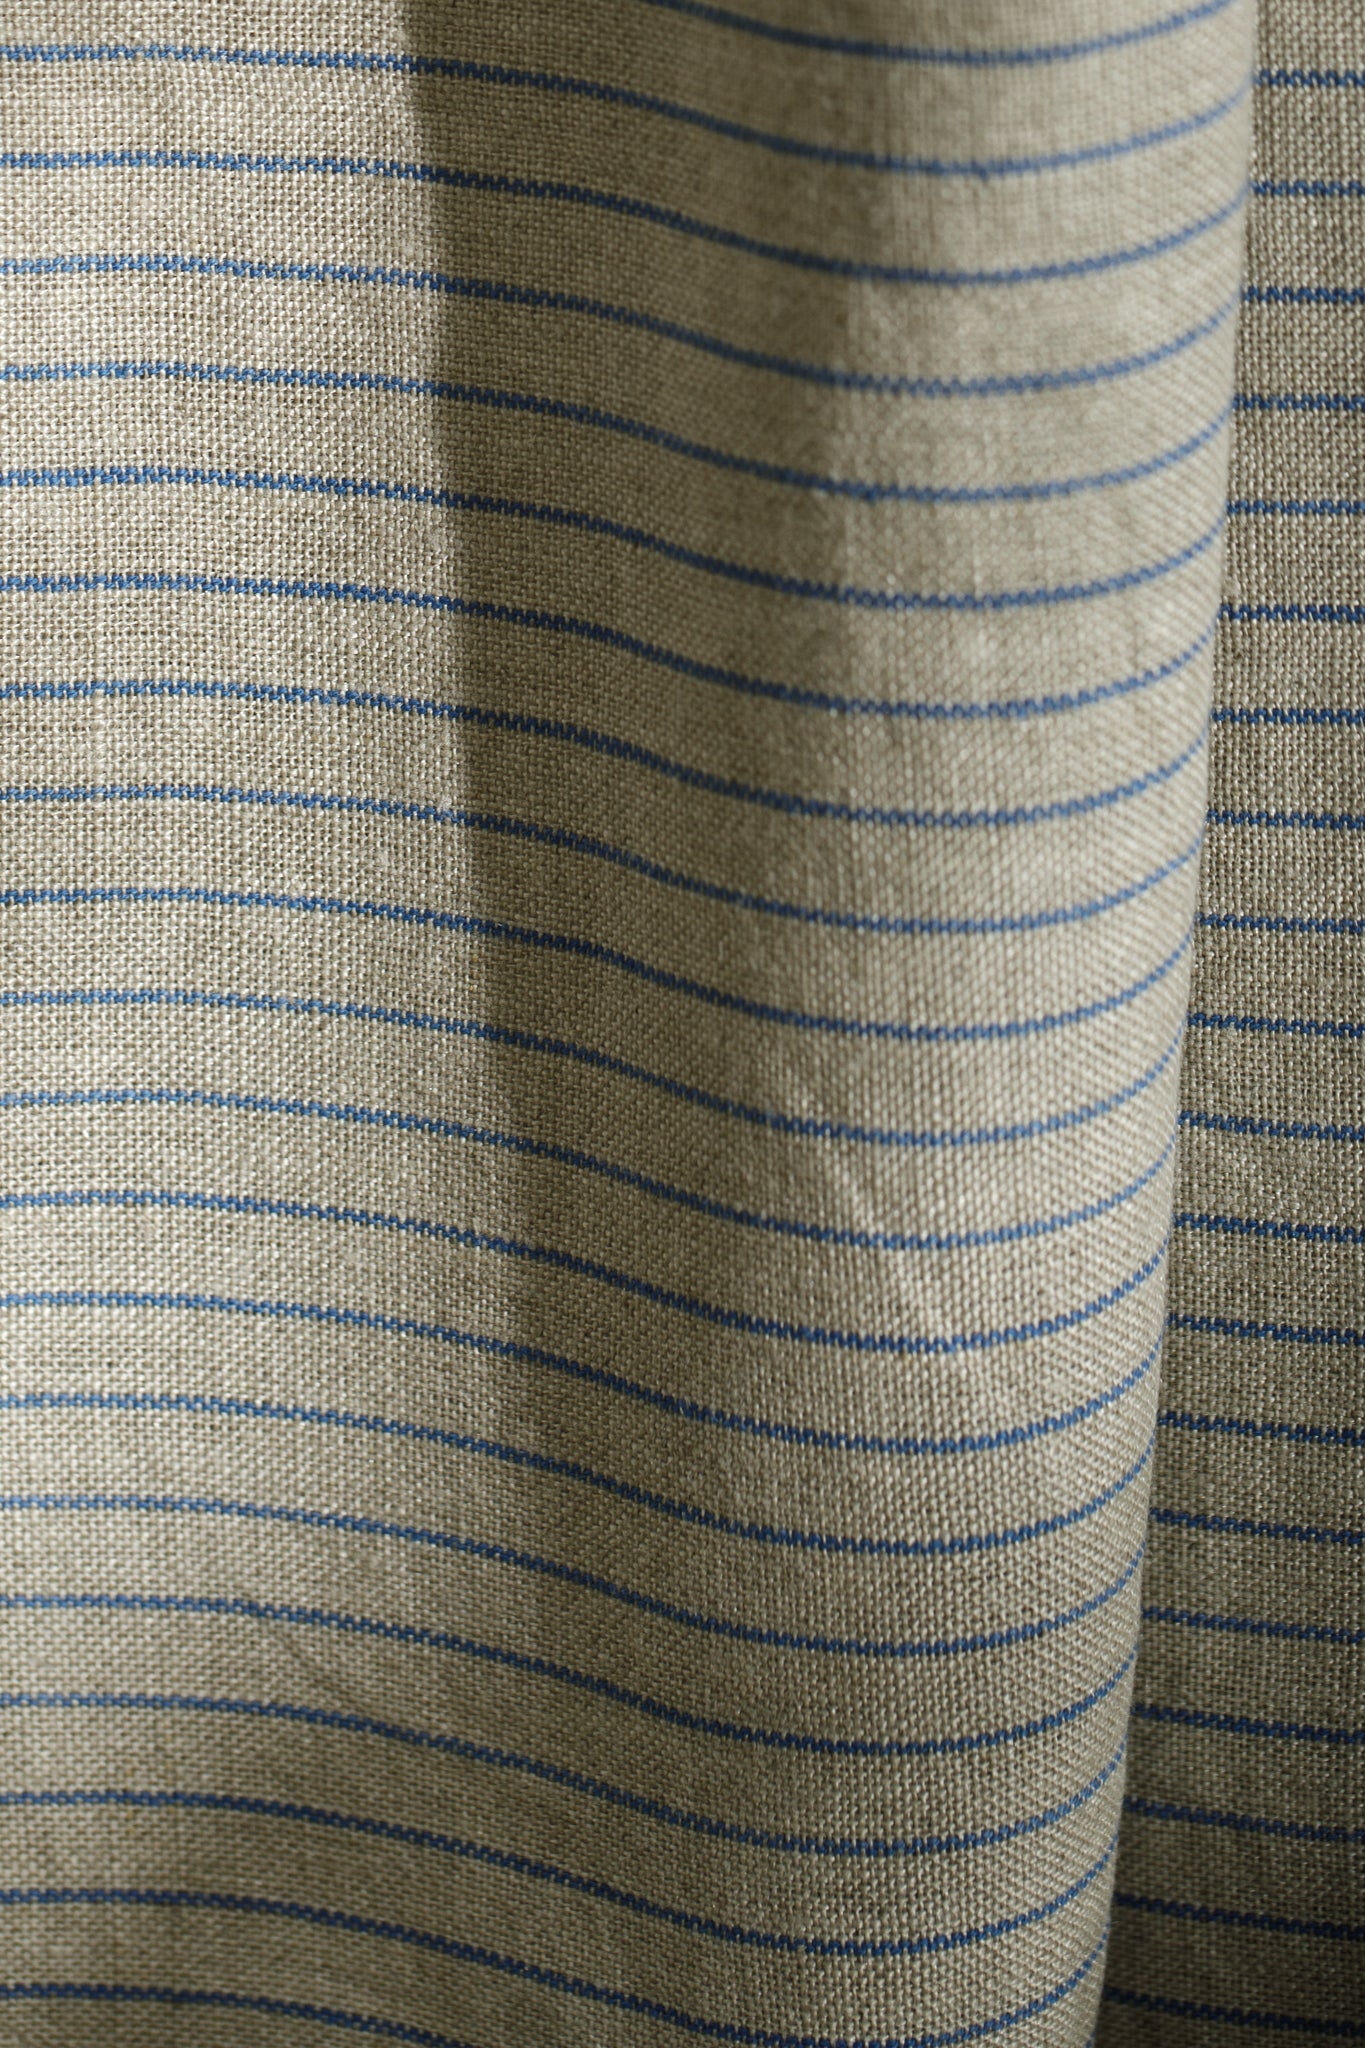 Beach towel / Blue striped